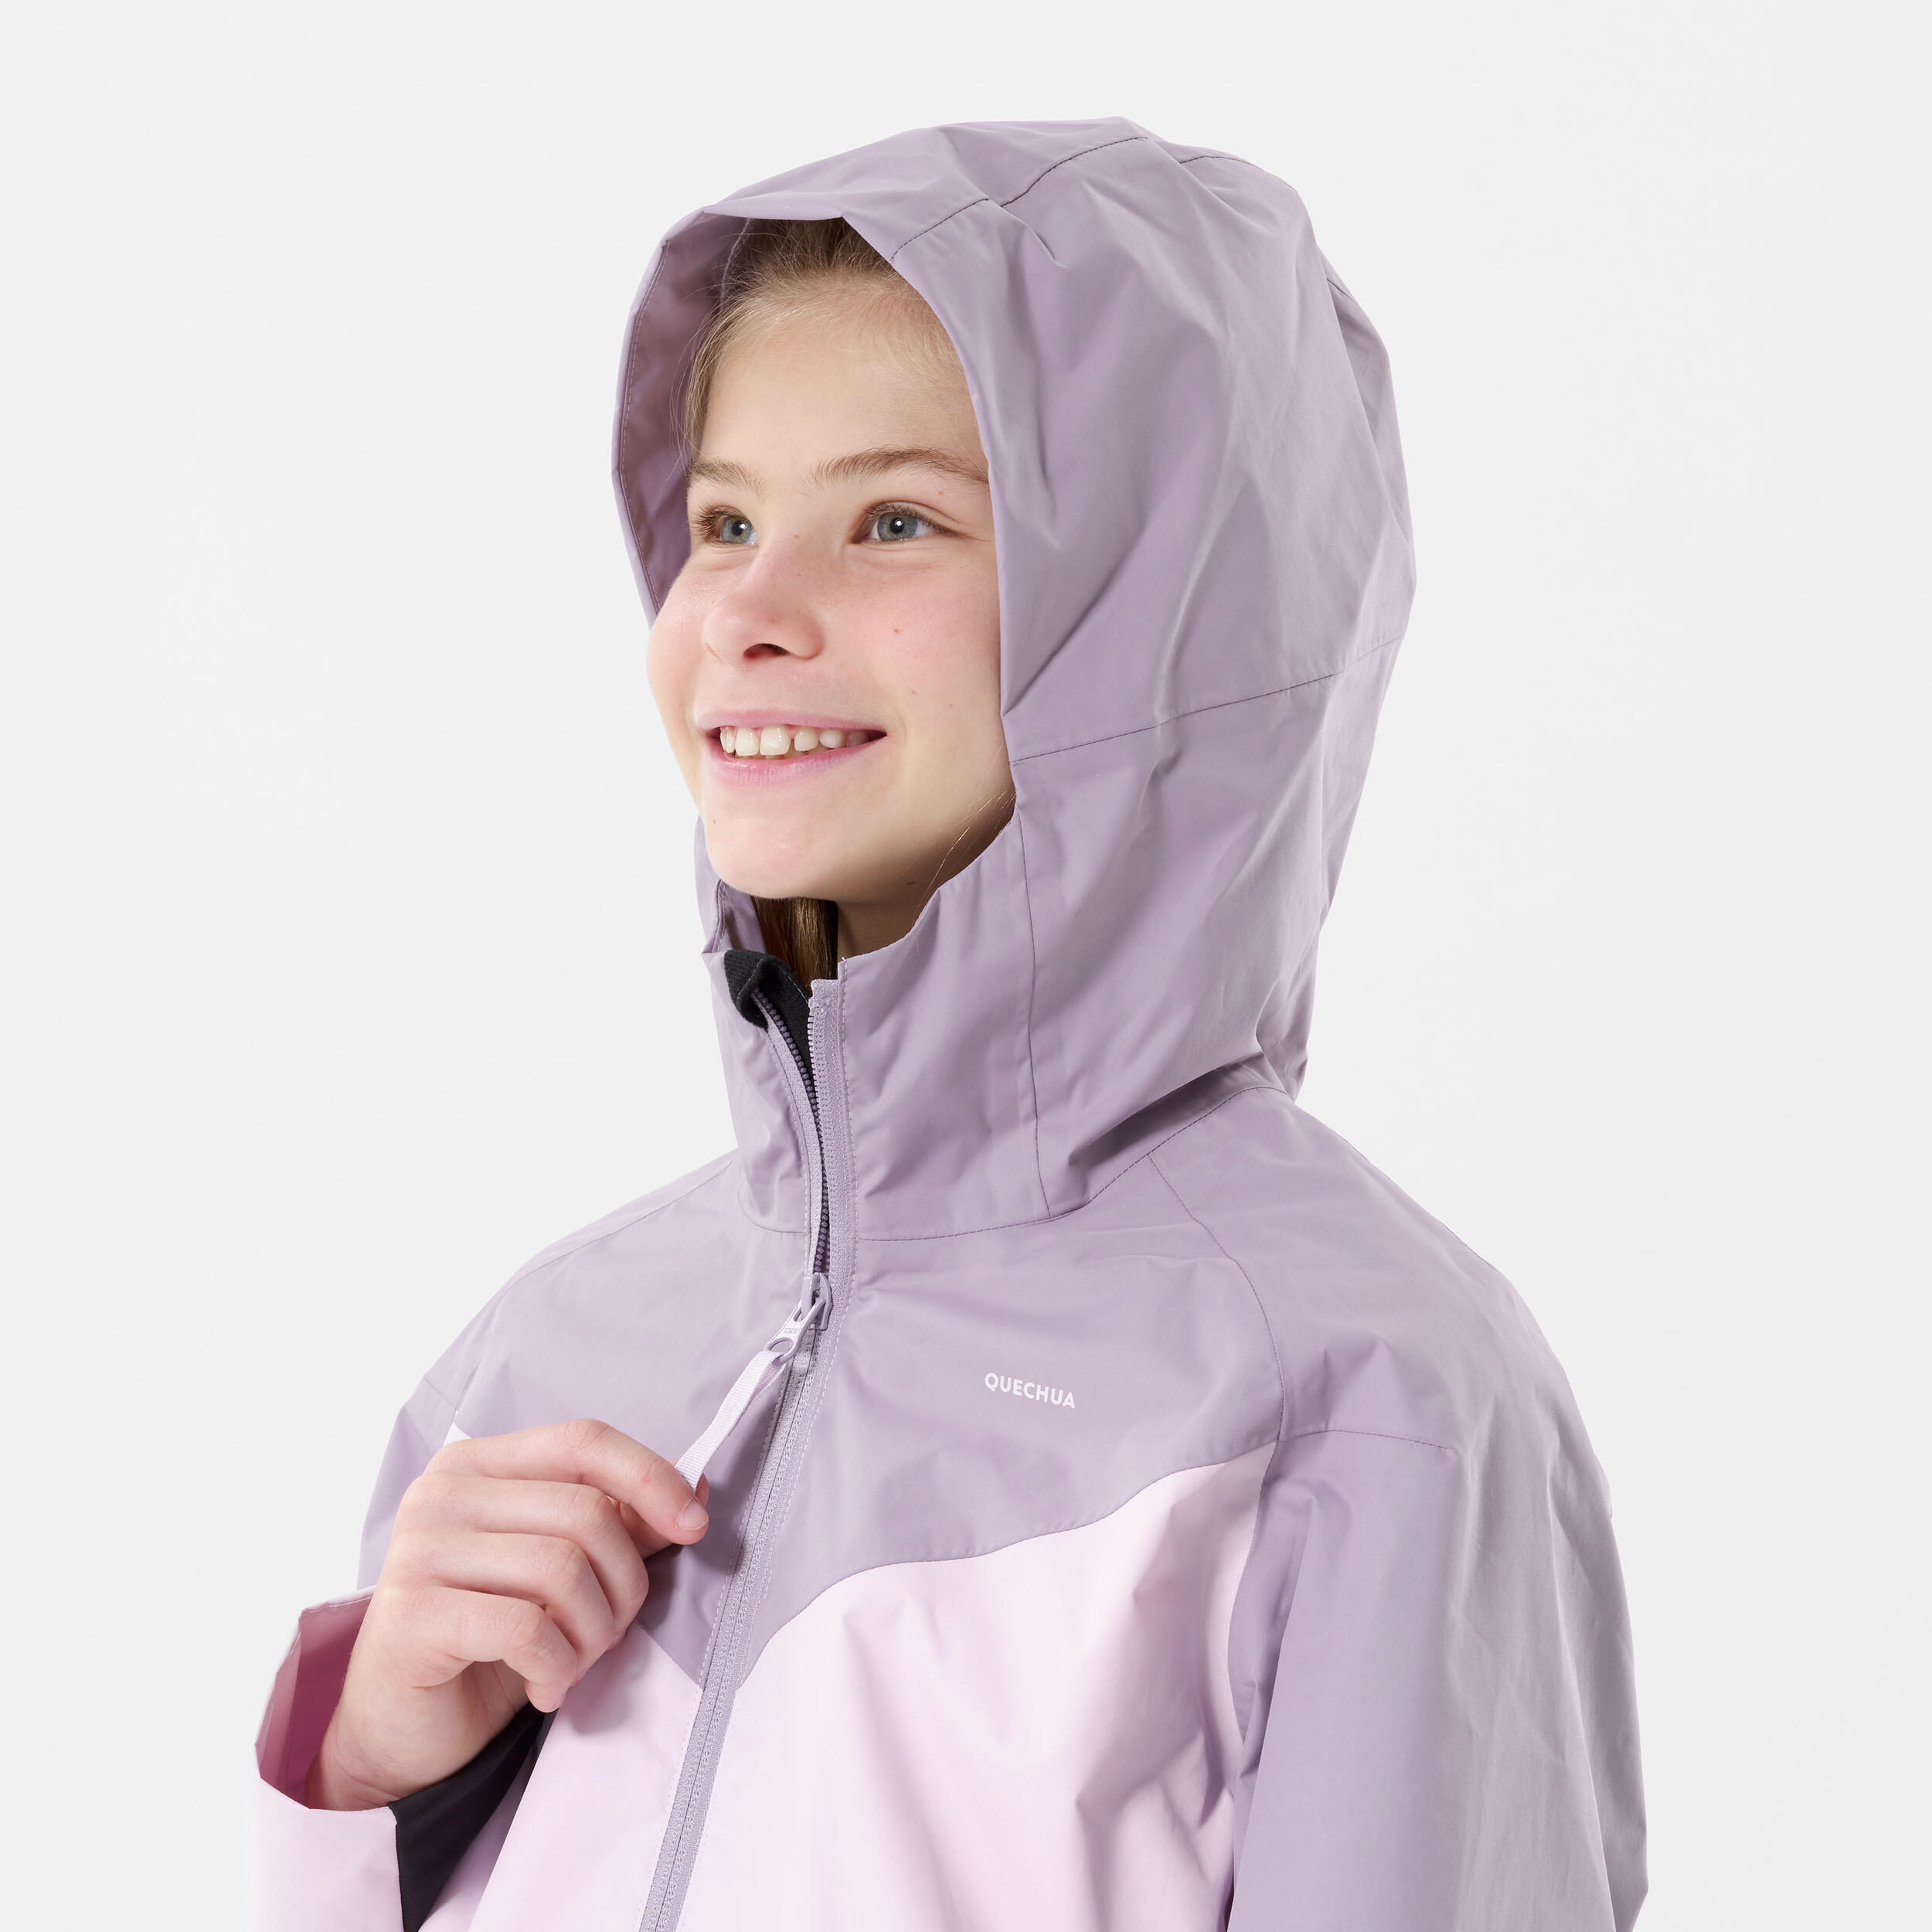 Child's waterproof hiking jacket - MH500 purple and mauve - 7-15 years 6/8